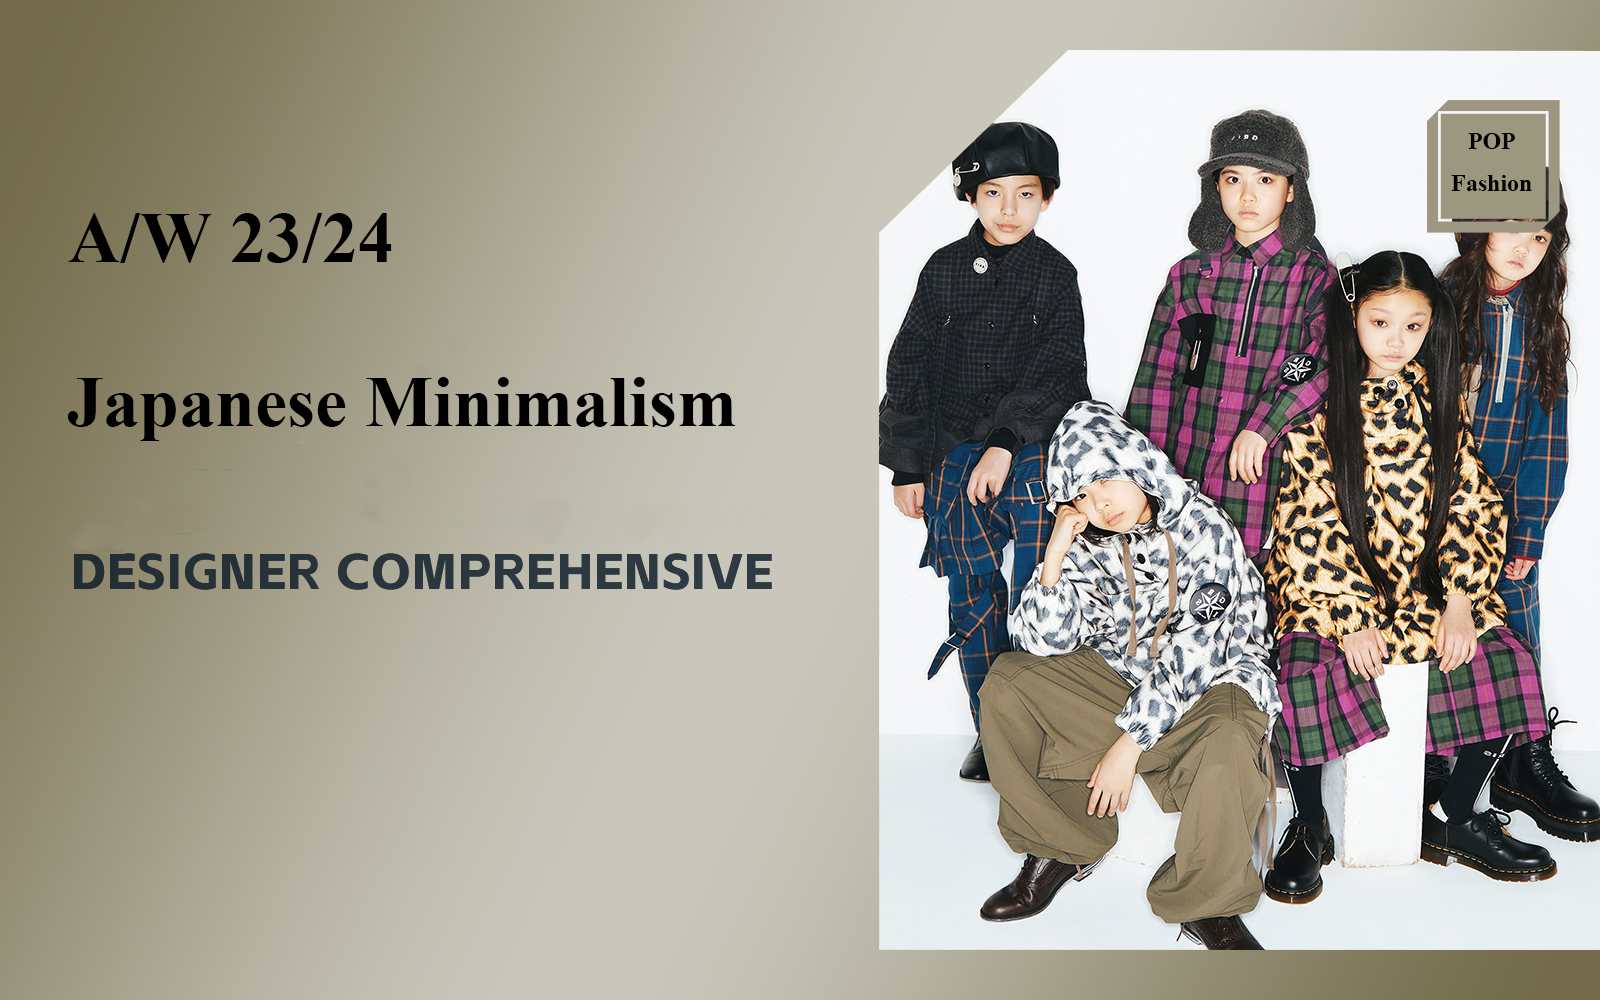 Japanese Minimalism -- The Comprehensive Analysis of Kidswear Designer Brand